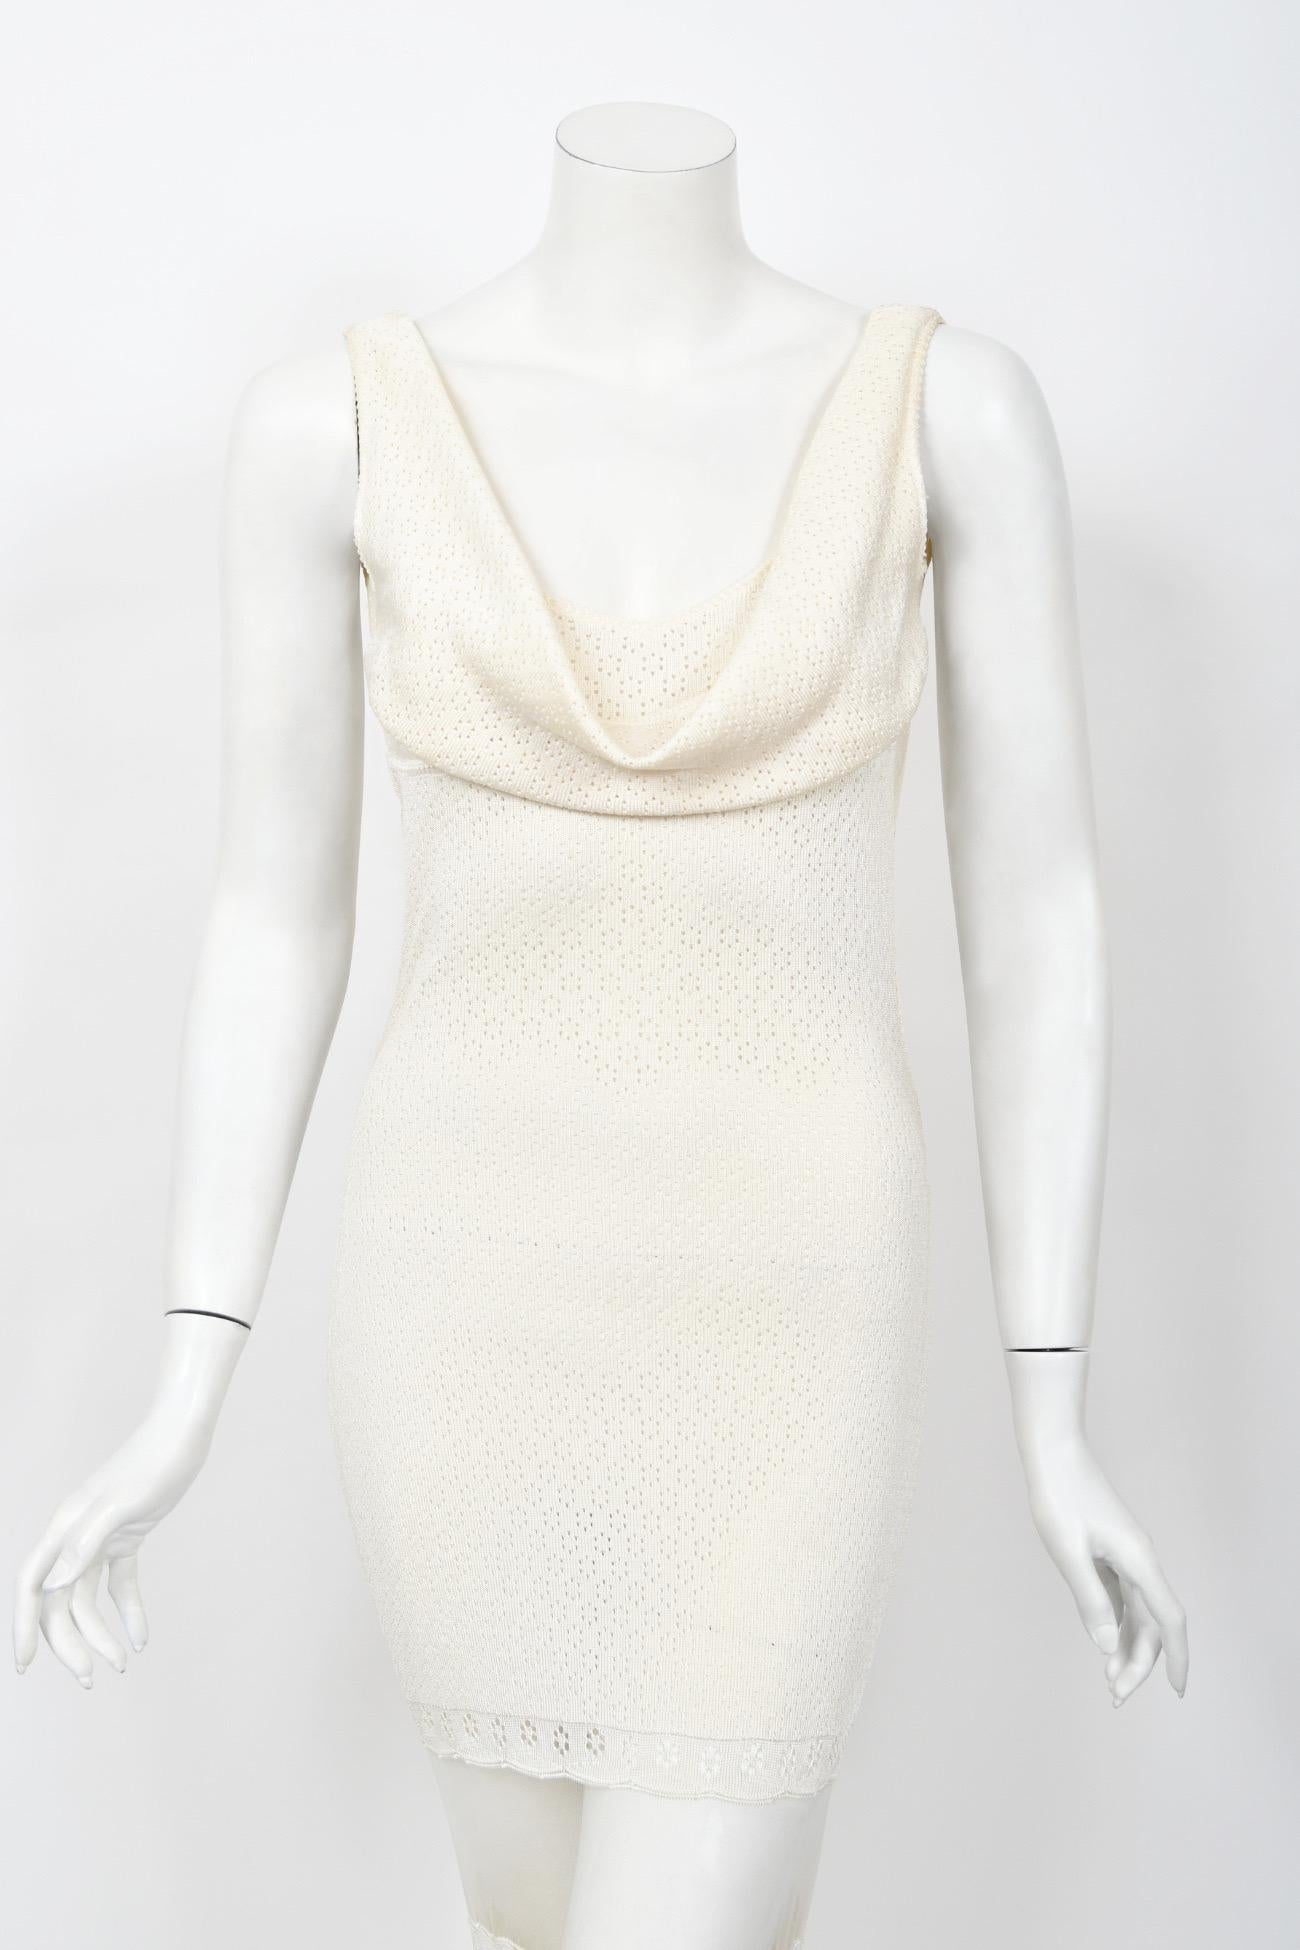 1998 John Galliano Runway Ivory Stretch Knit Sheer Bias-Cut Backless Bridal Gown 4